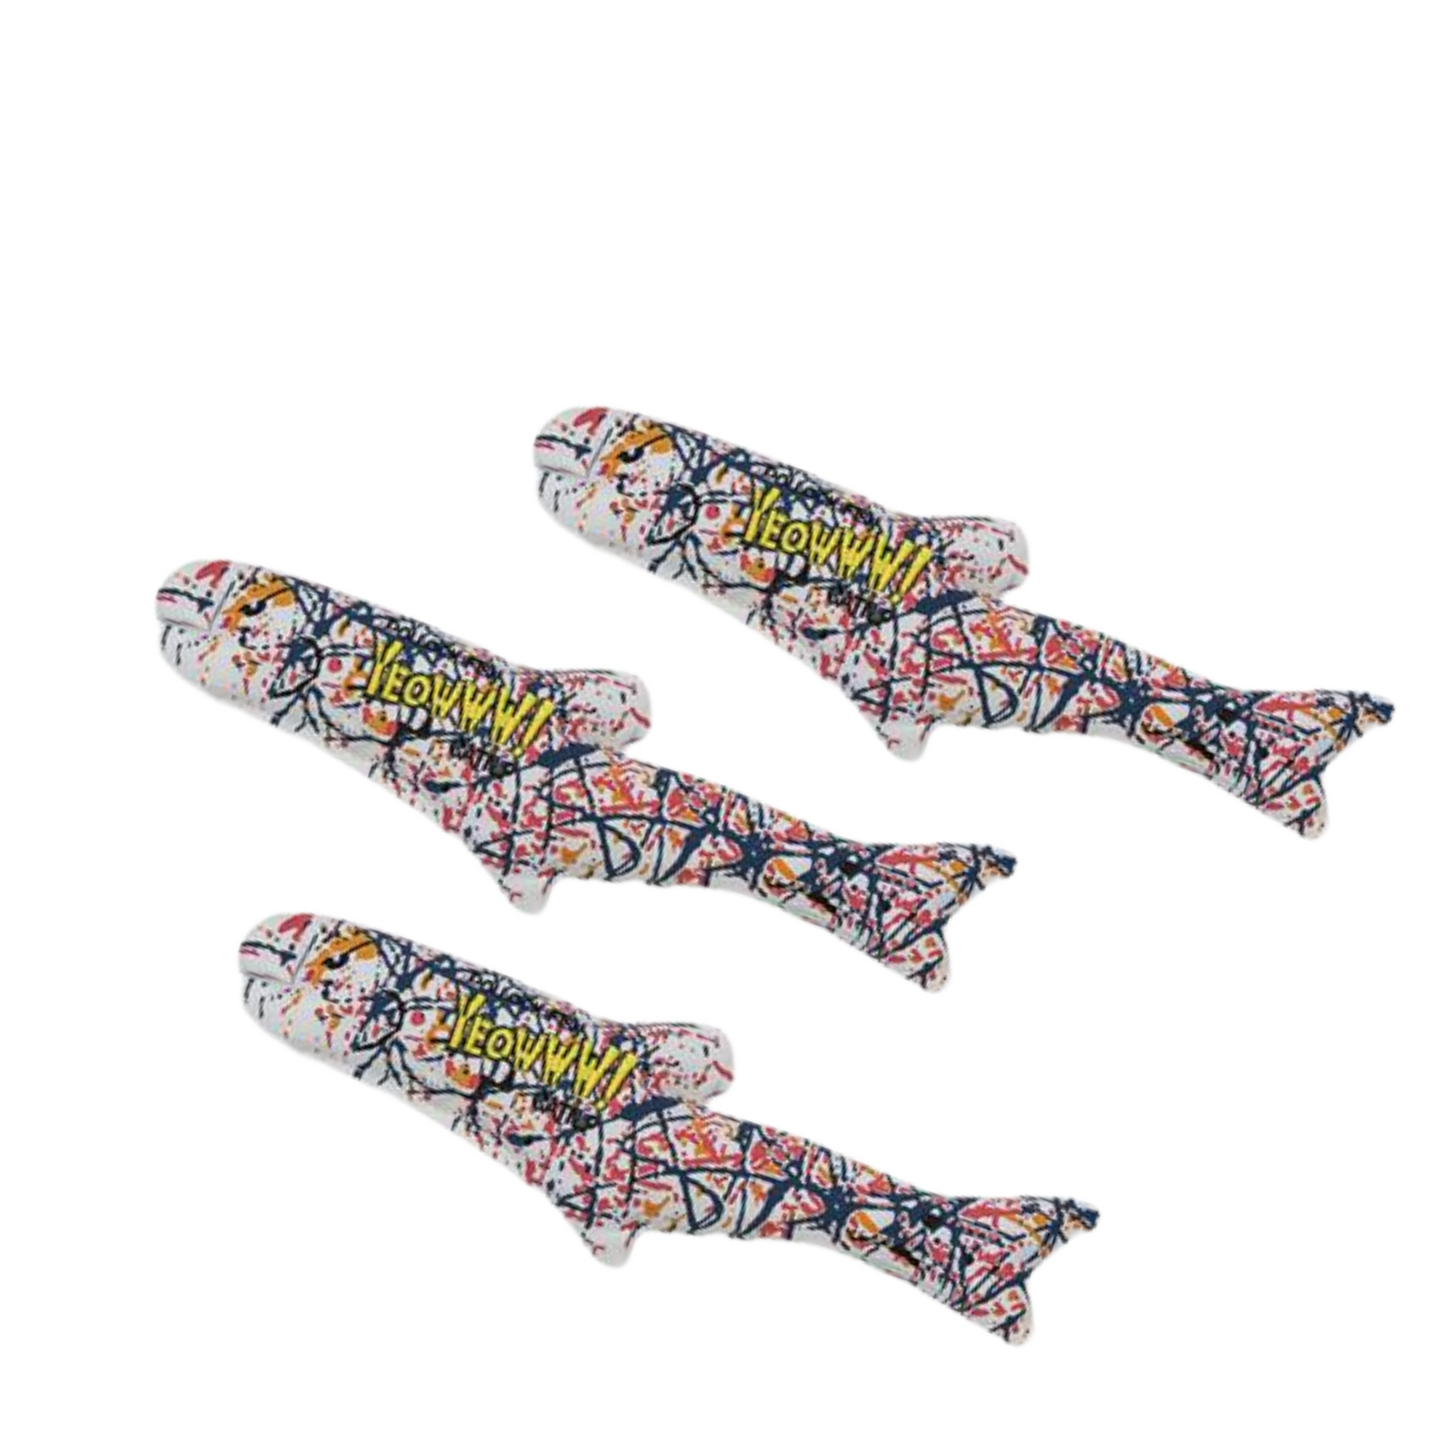 Yeowww! Pollock Fish Catnip Toy, 3 Pack